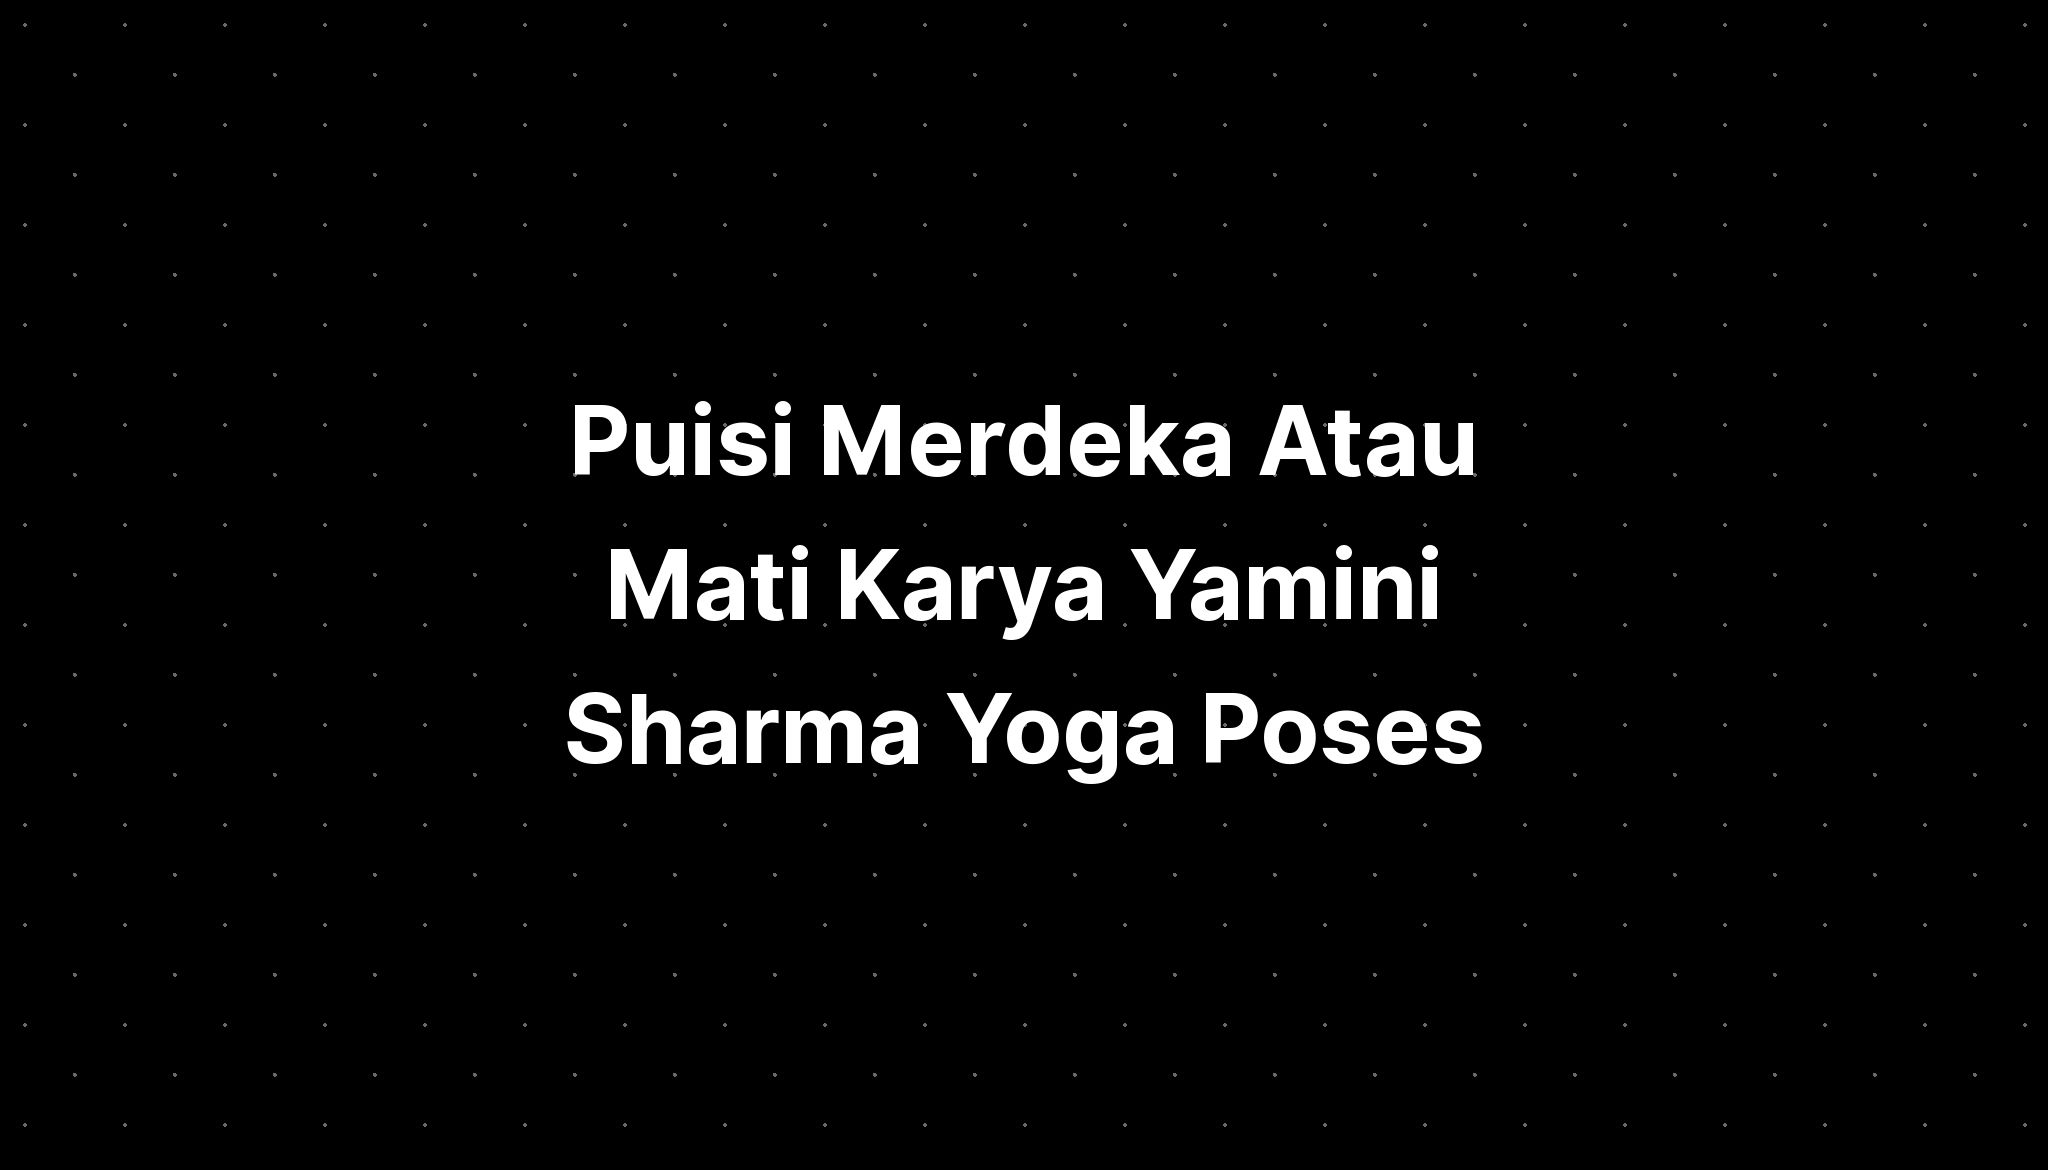 Puisi Merdeka Atau Mati Karya Yamini Sharma Yoga Poses - IMAGESEE